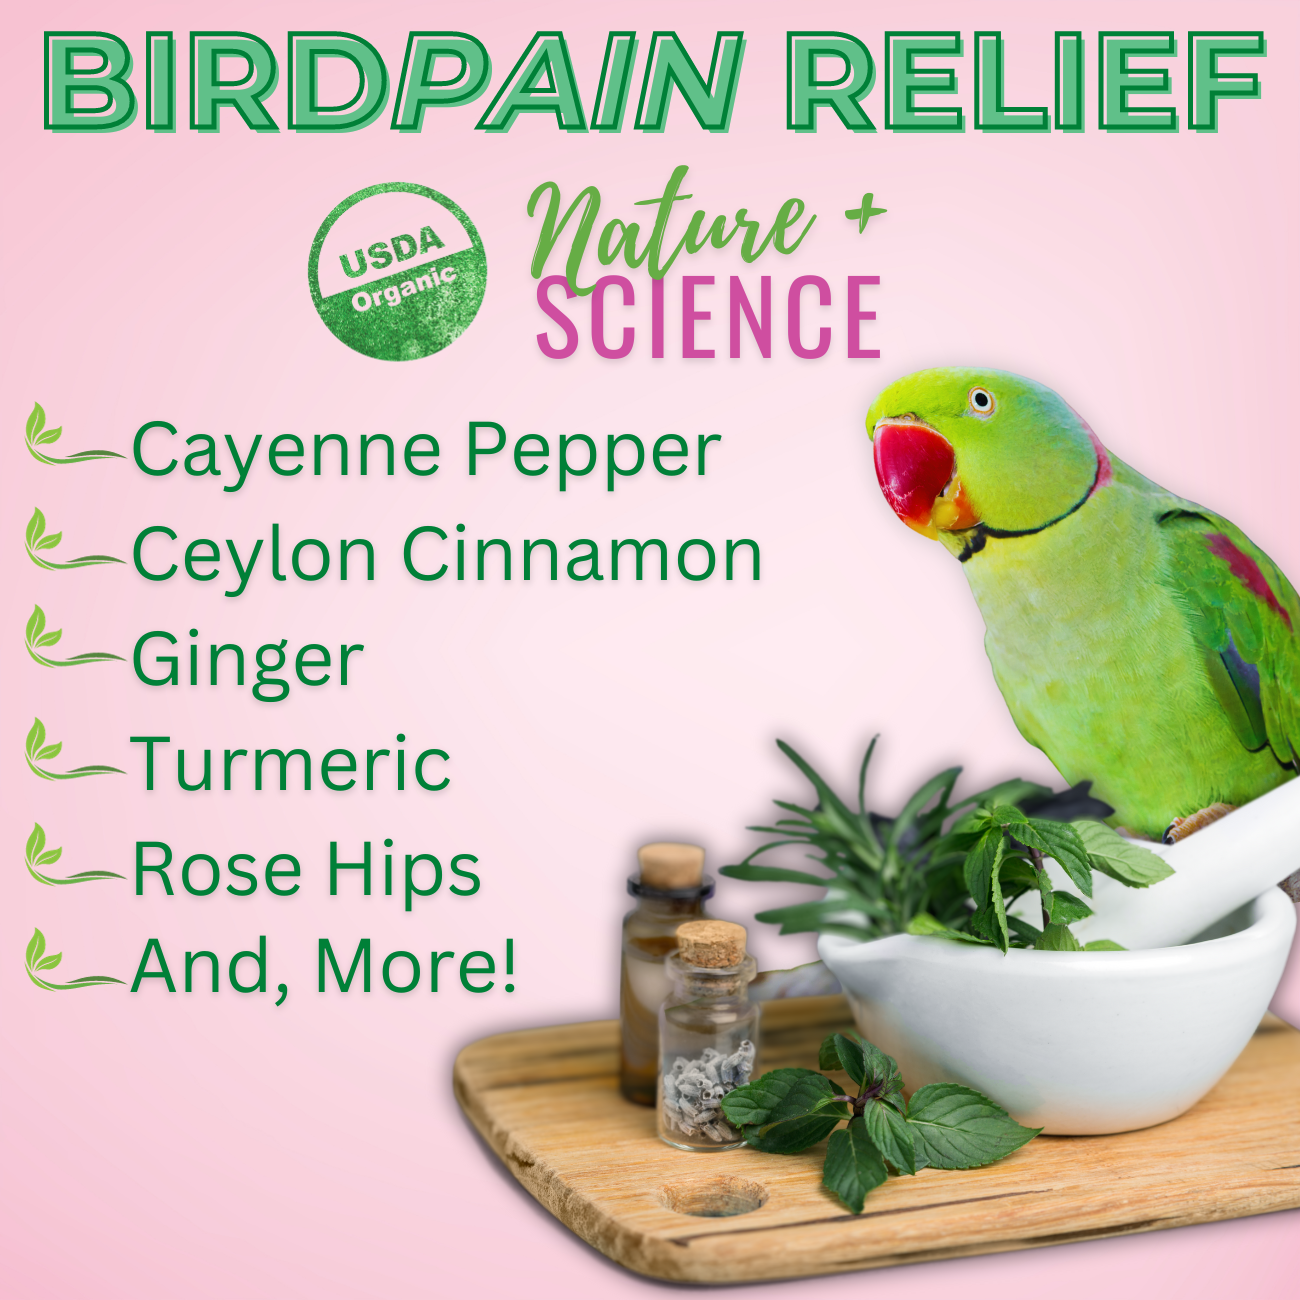 Natural Bird Pain Relief, 2 oz.